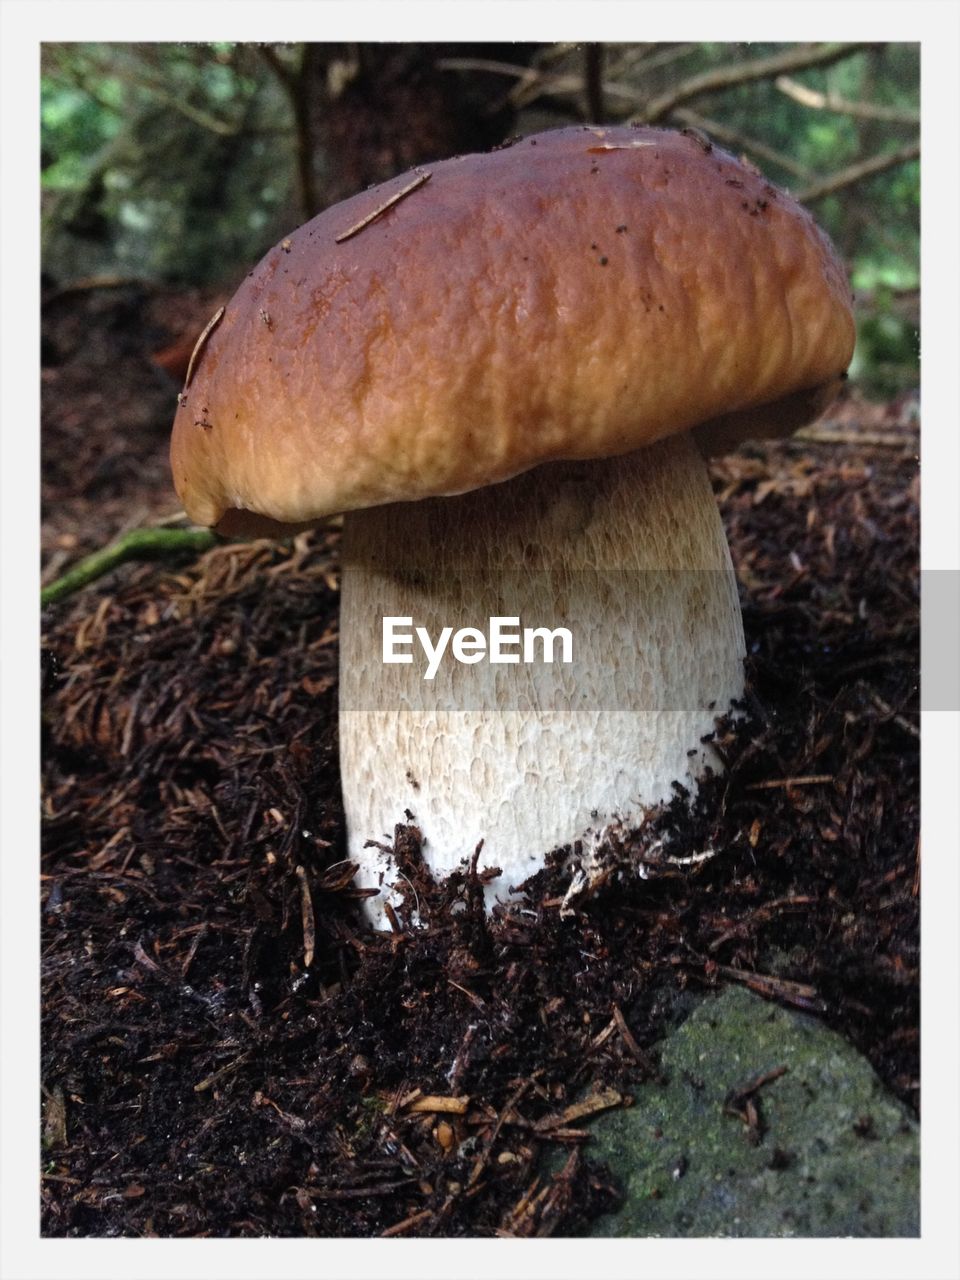 Big fungus